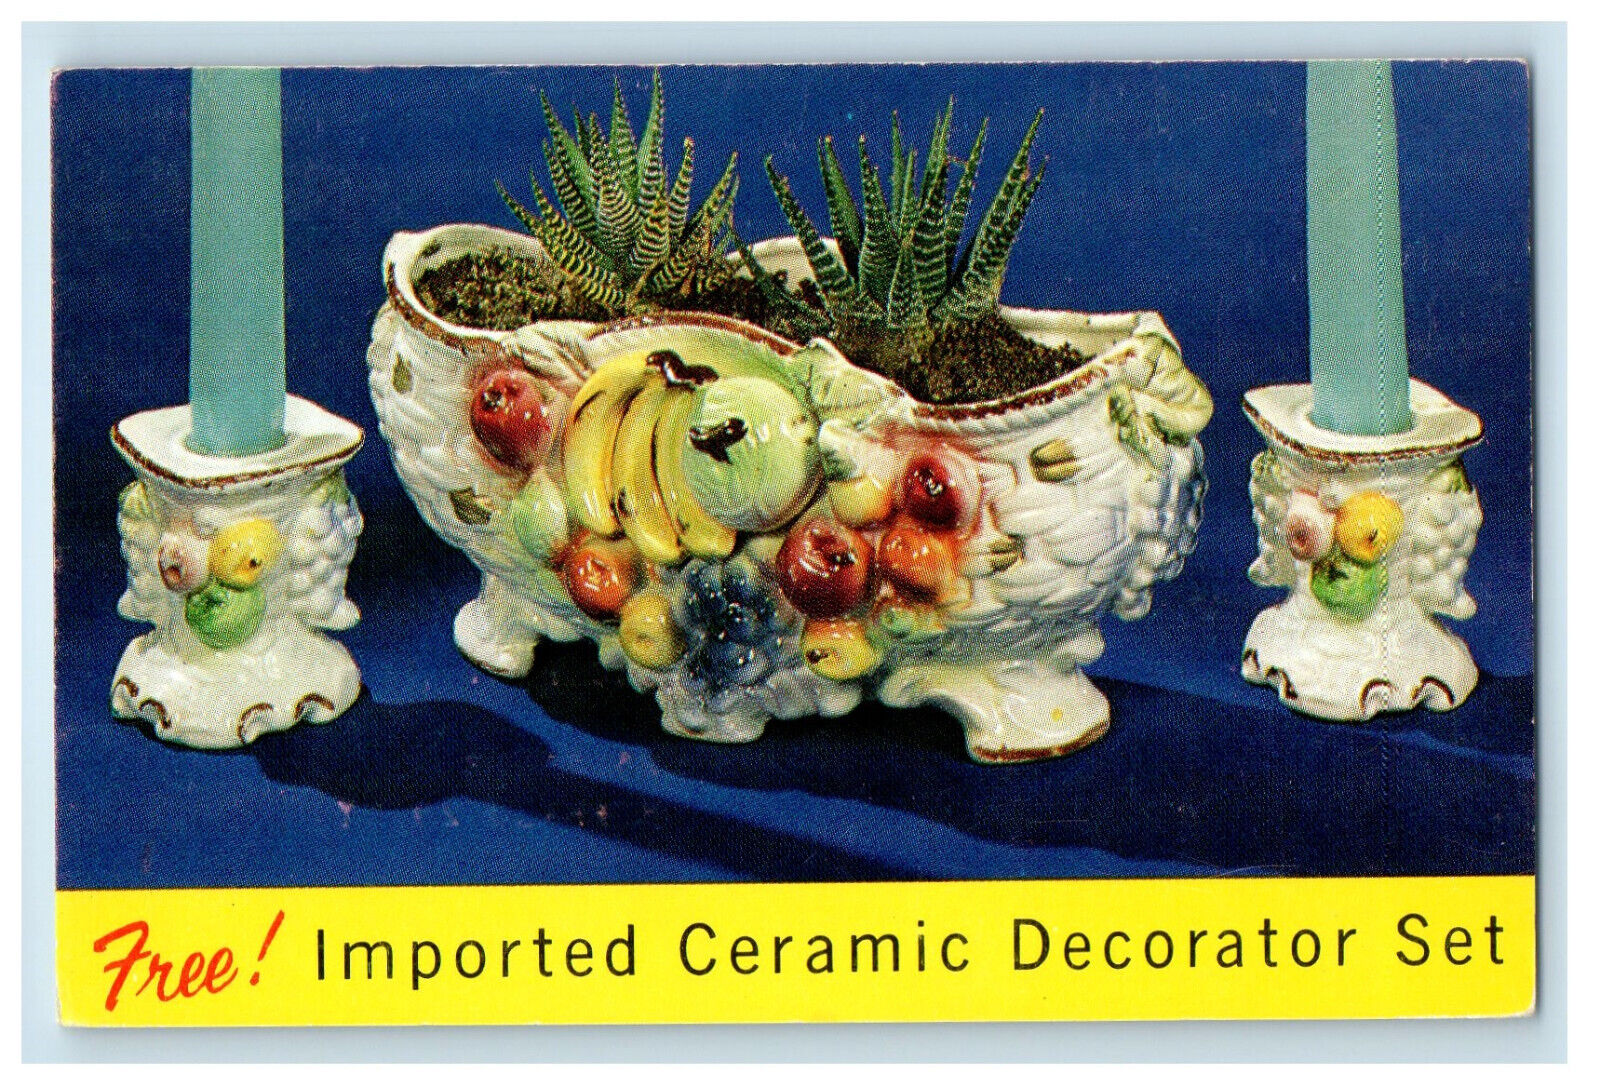 c1950's Free Imported Ceramic Decorator Set Kay Jewelers Buffalo NY Postcard